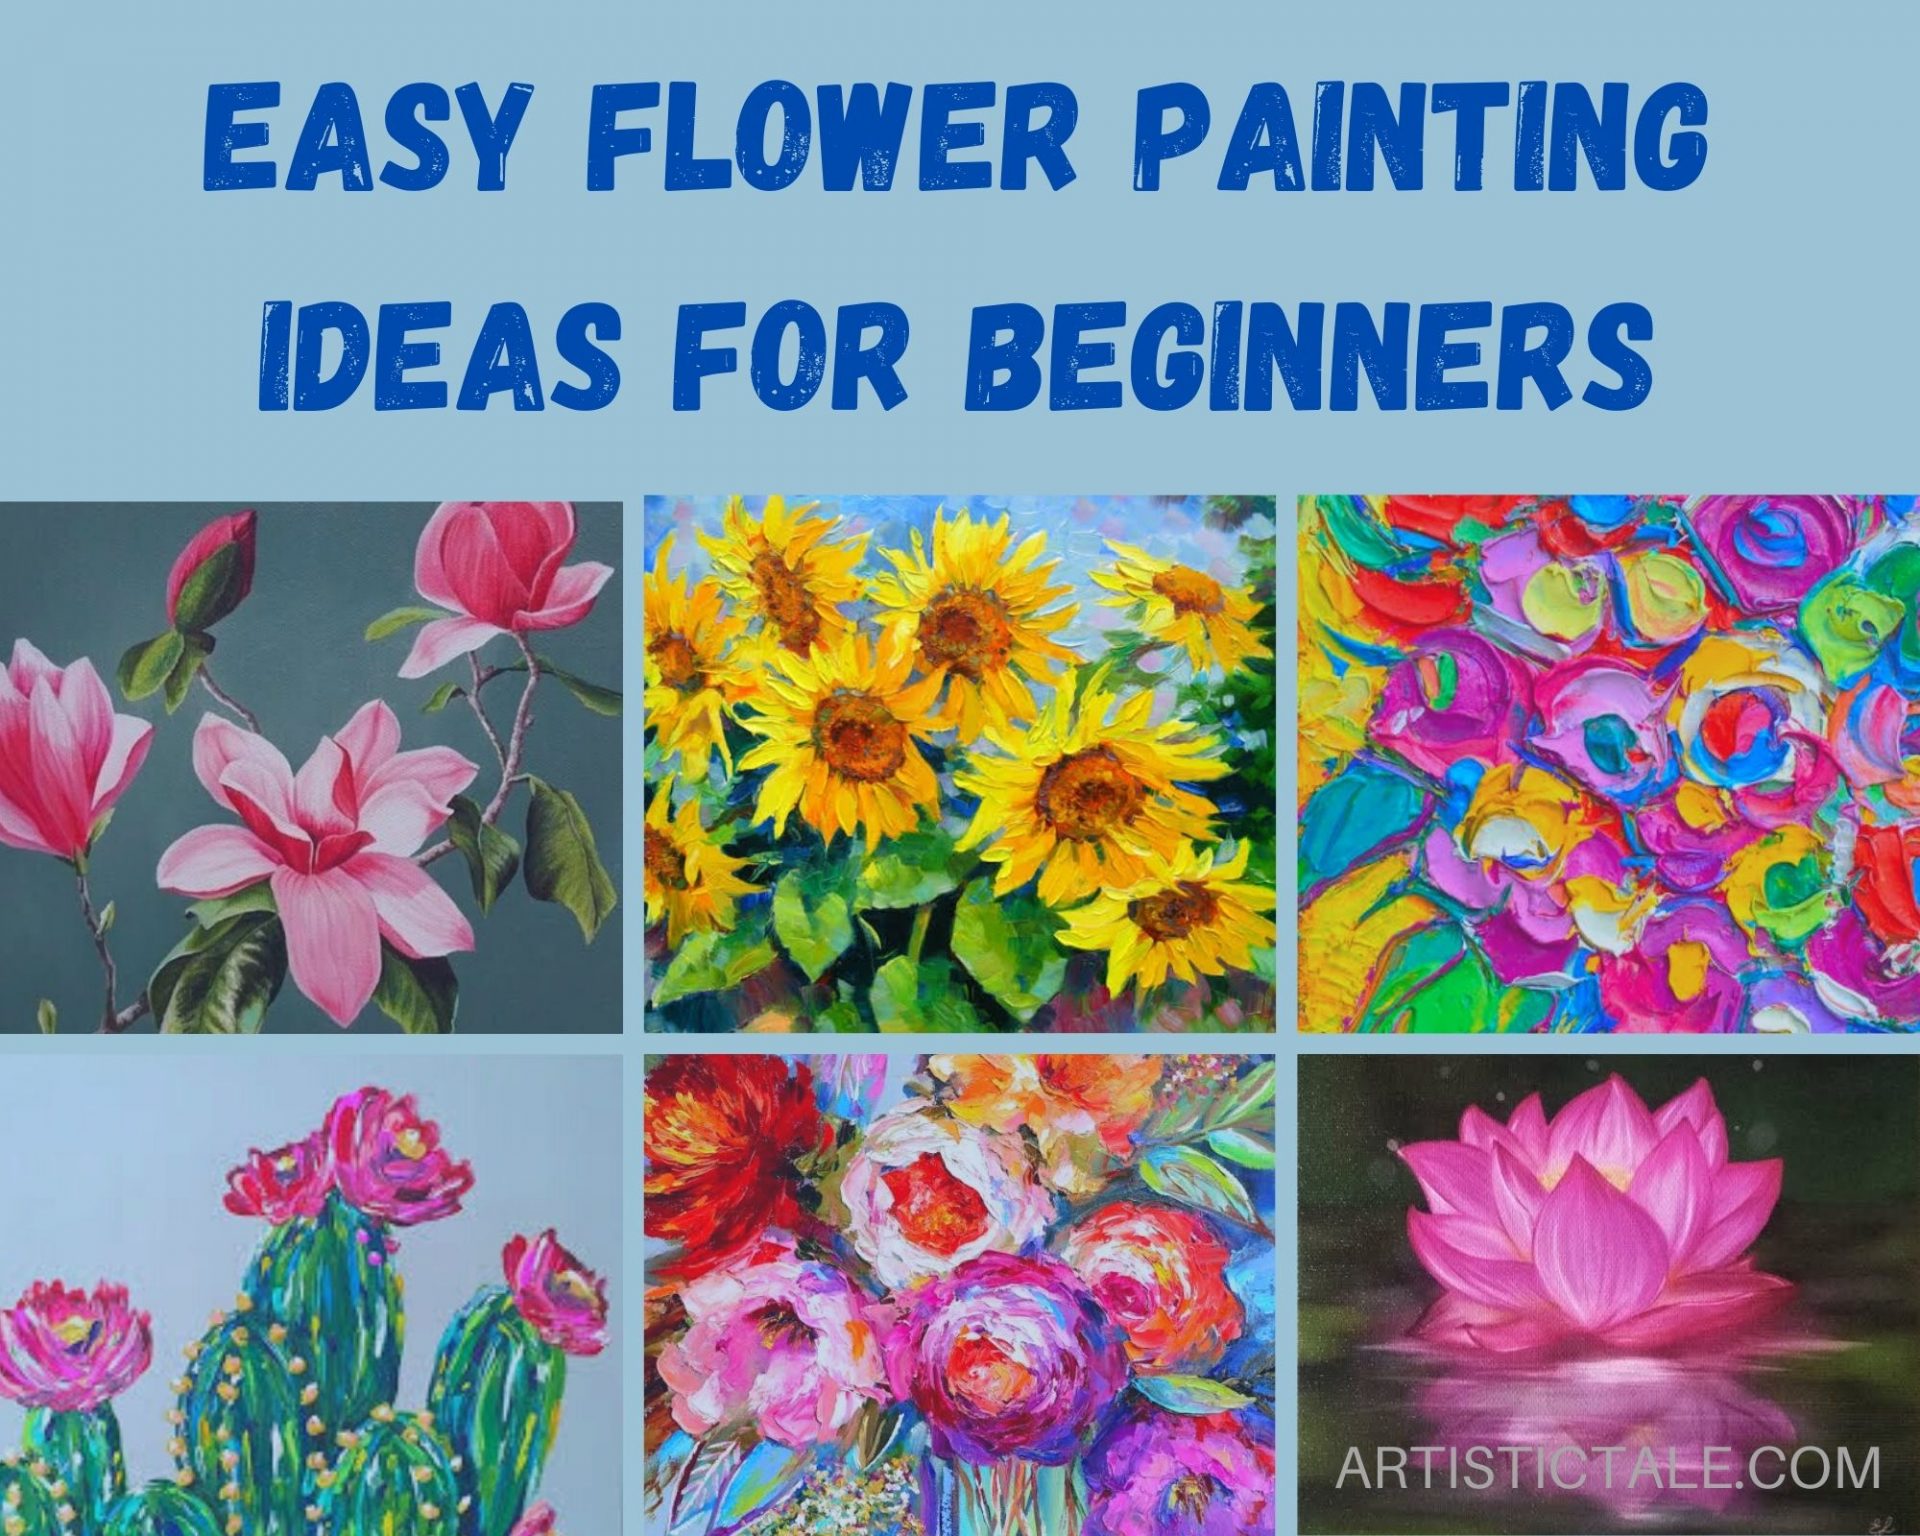 Easy flower painting ideas for beginners